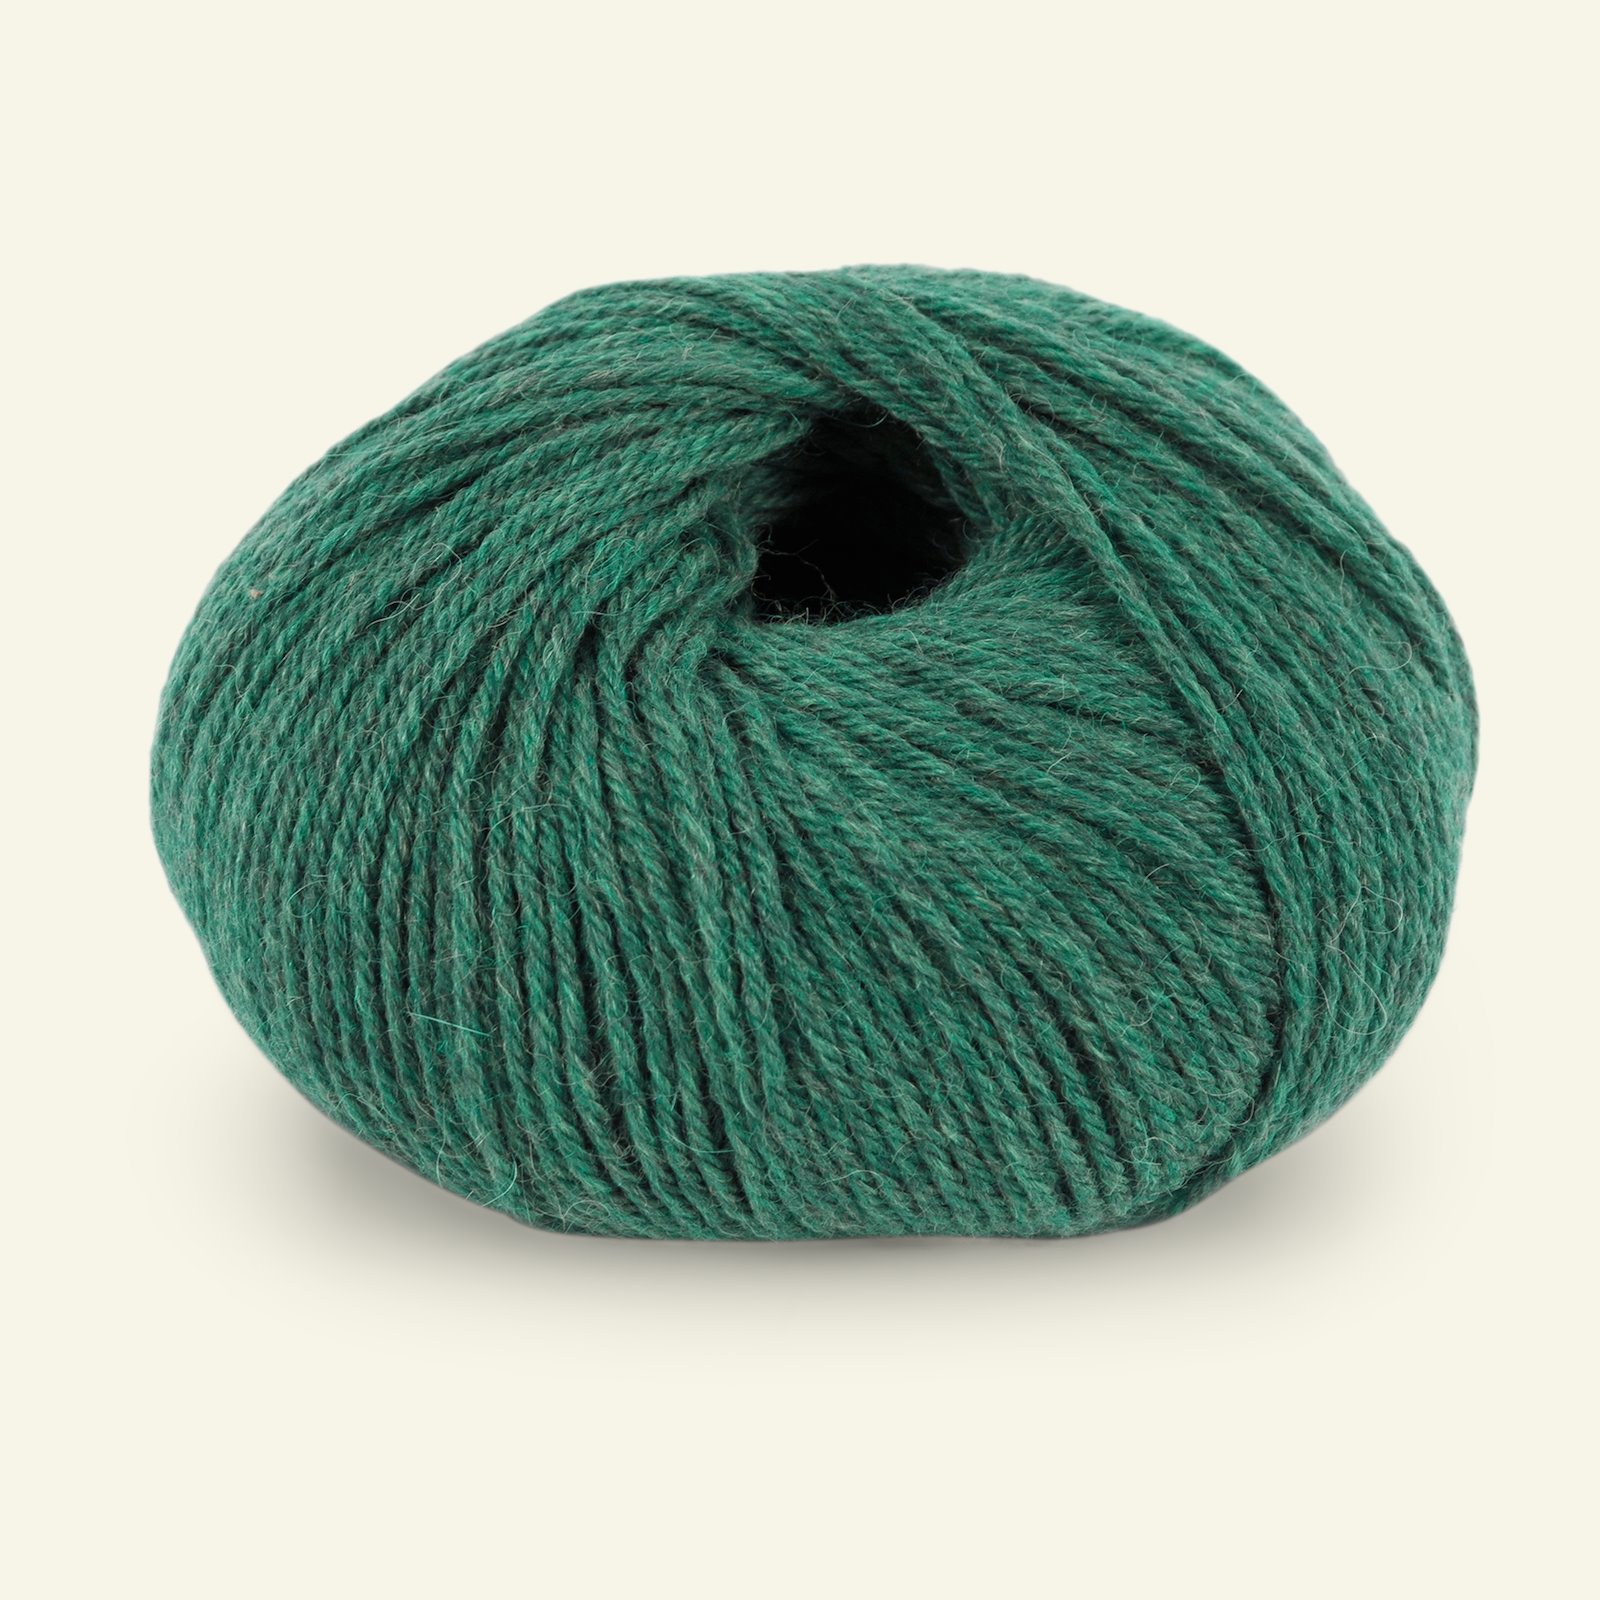 Du Store Alpakka, alpaca merino mixed yarn "Sterk", green melange (888) 90000689_pack_b